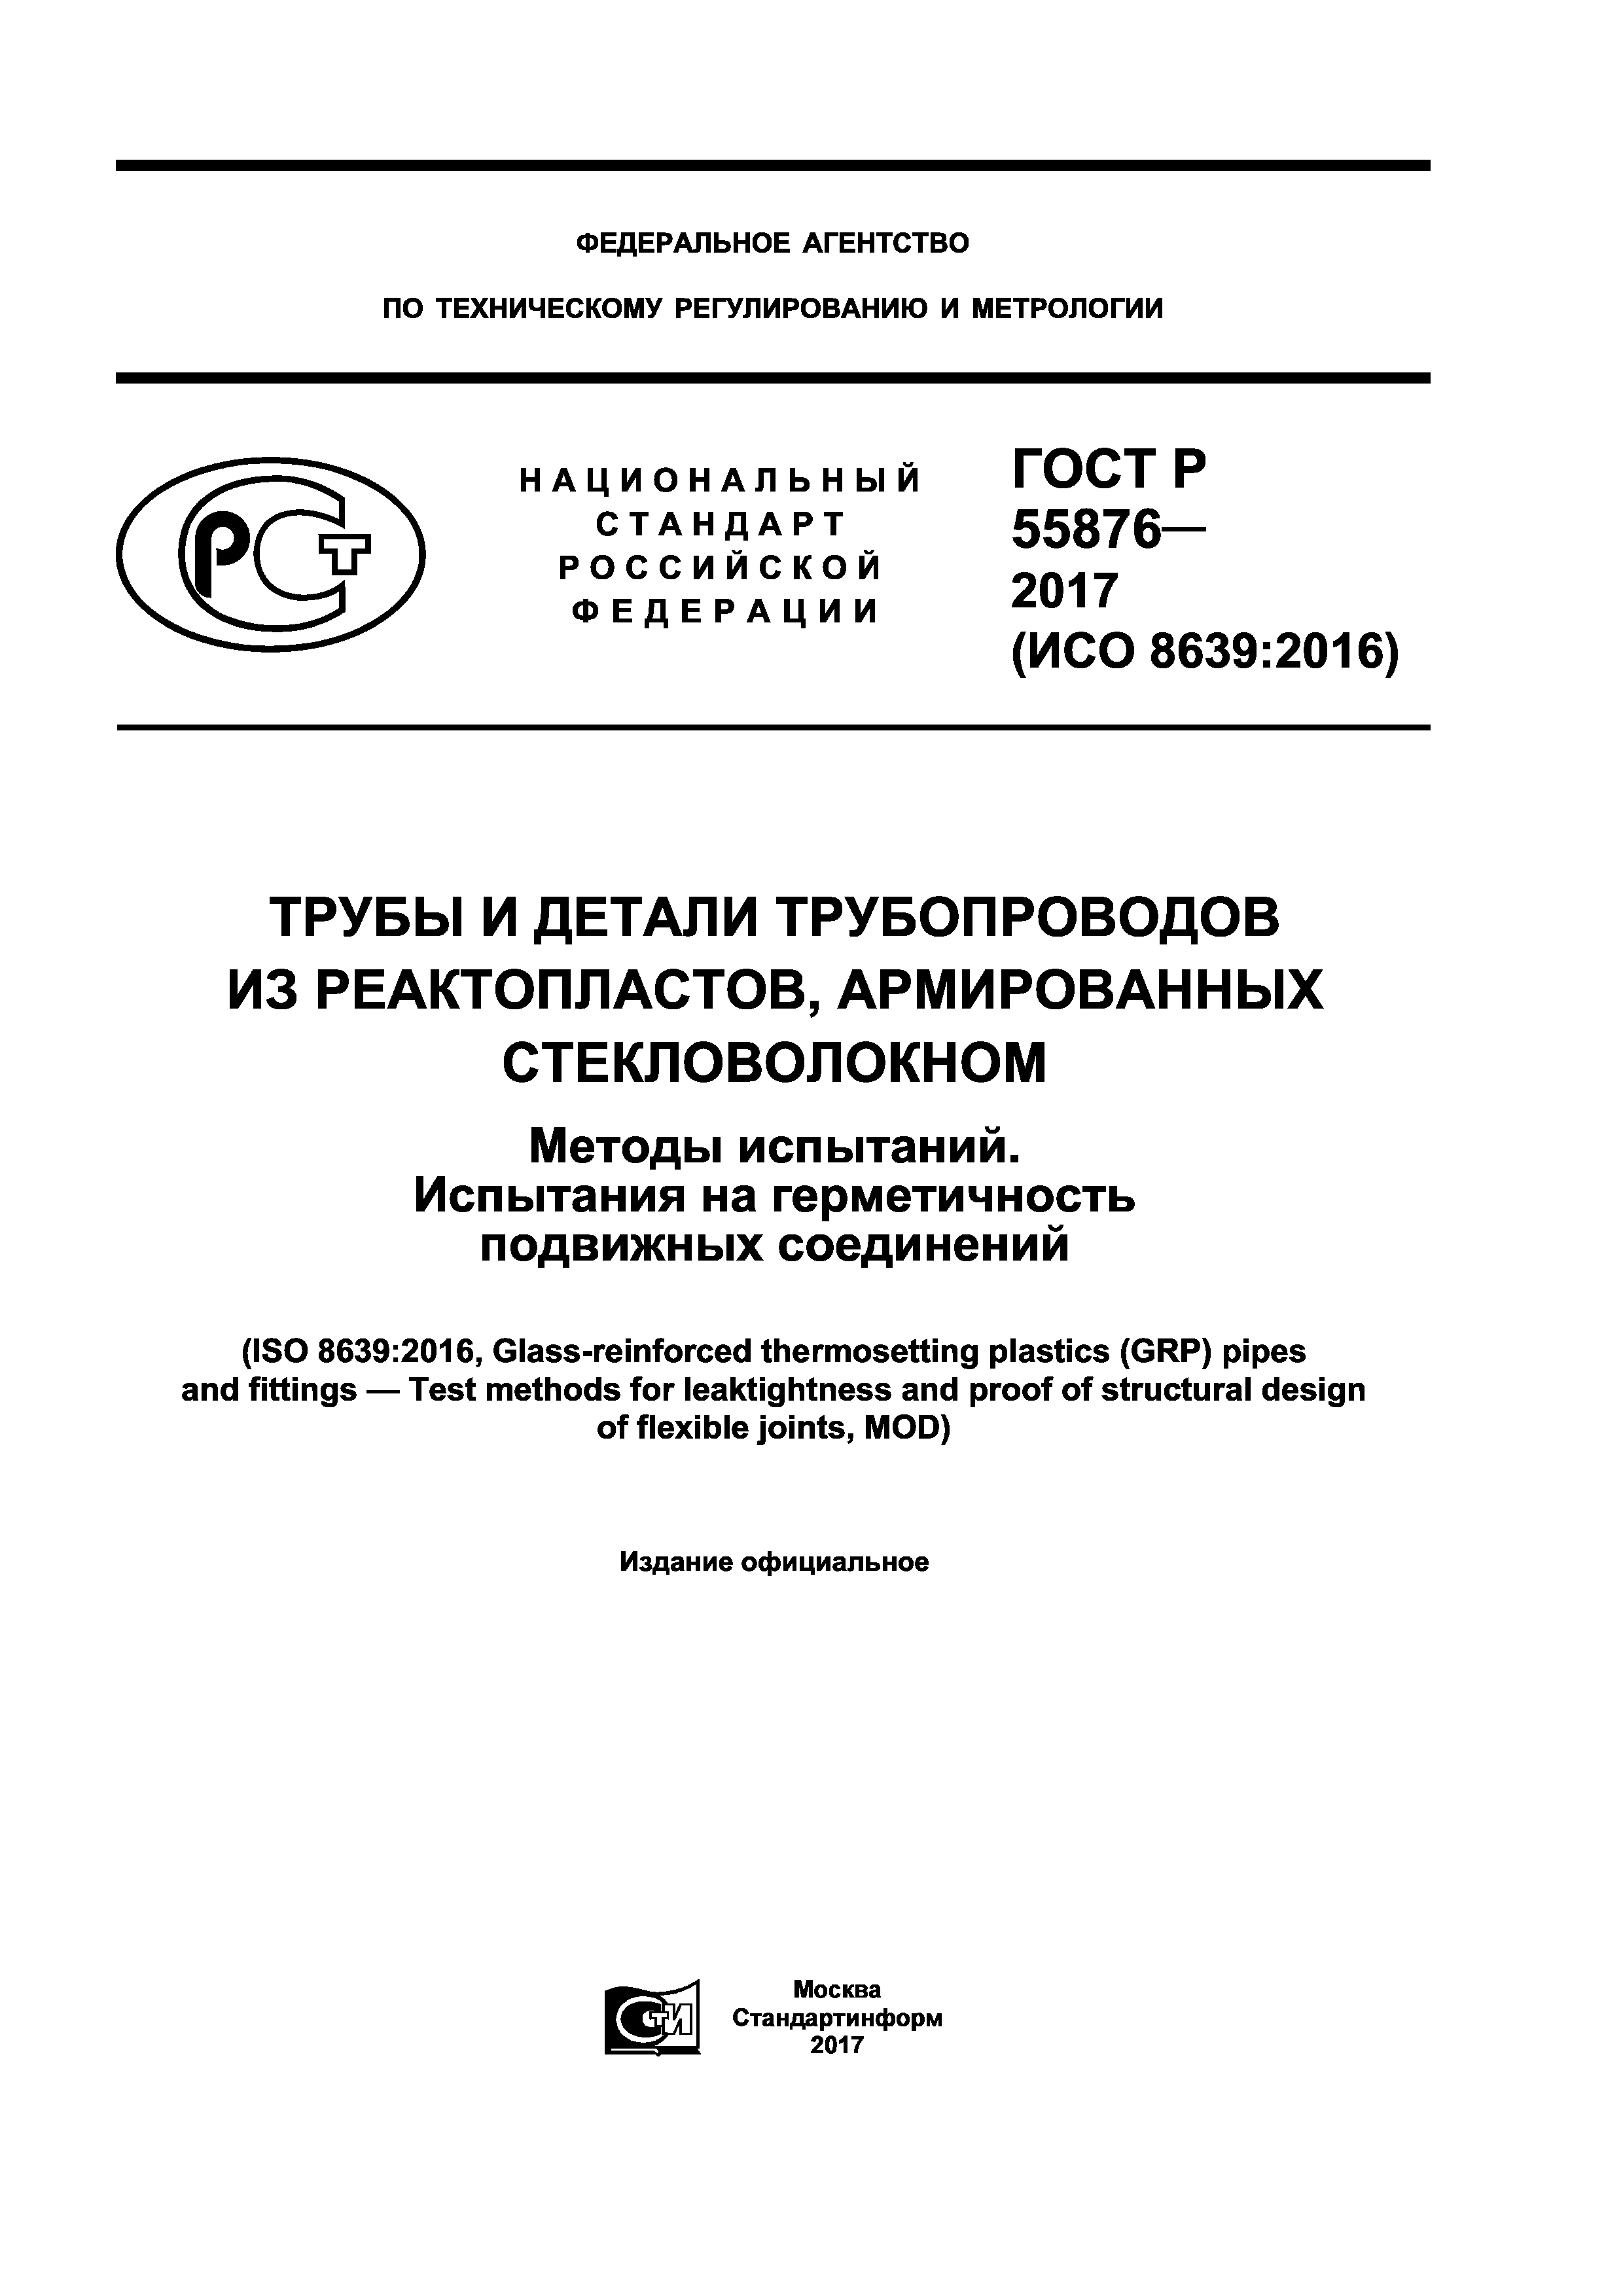 ГОСТ Р 55876-2017